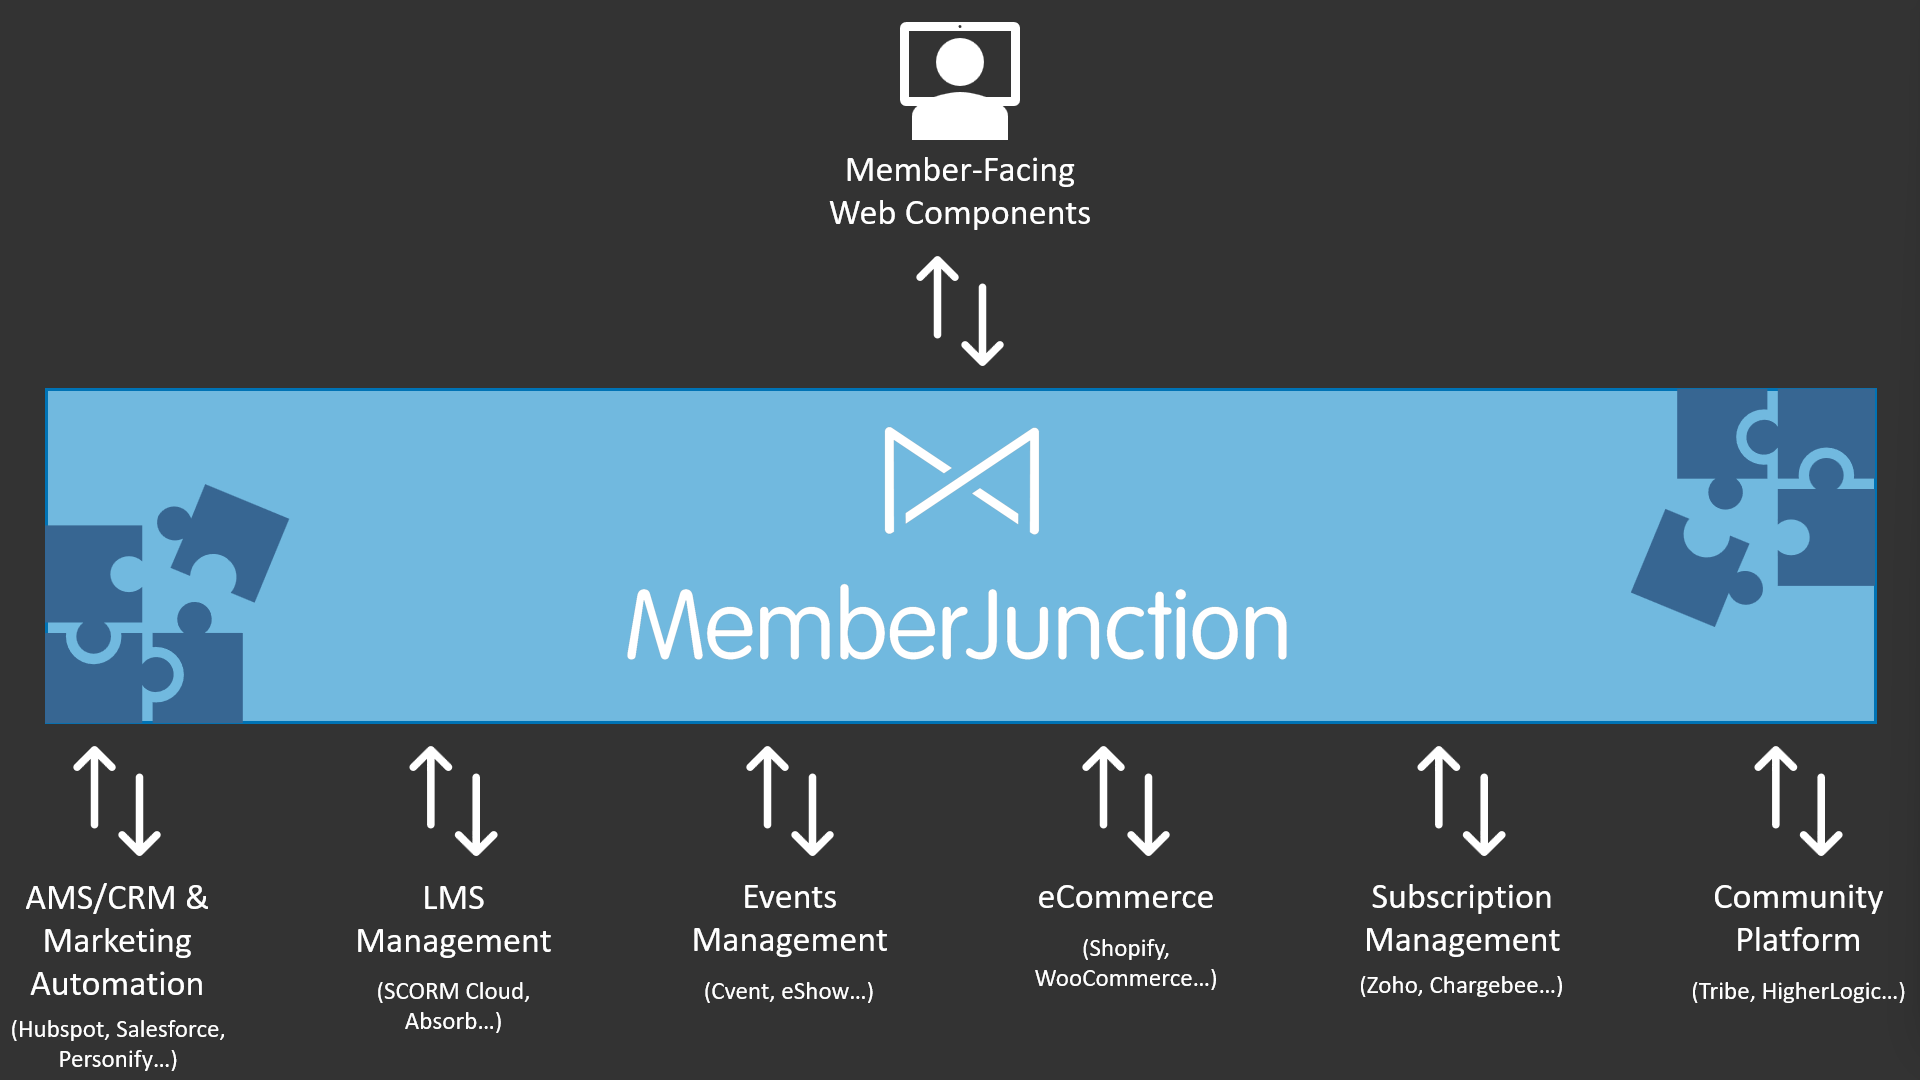 MemberJunction architecture